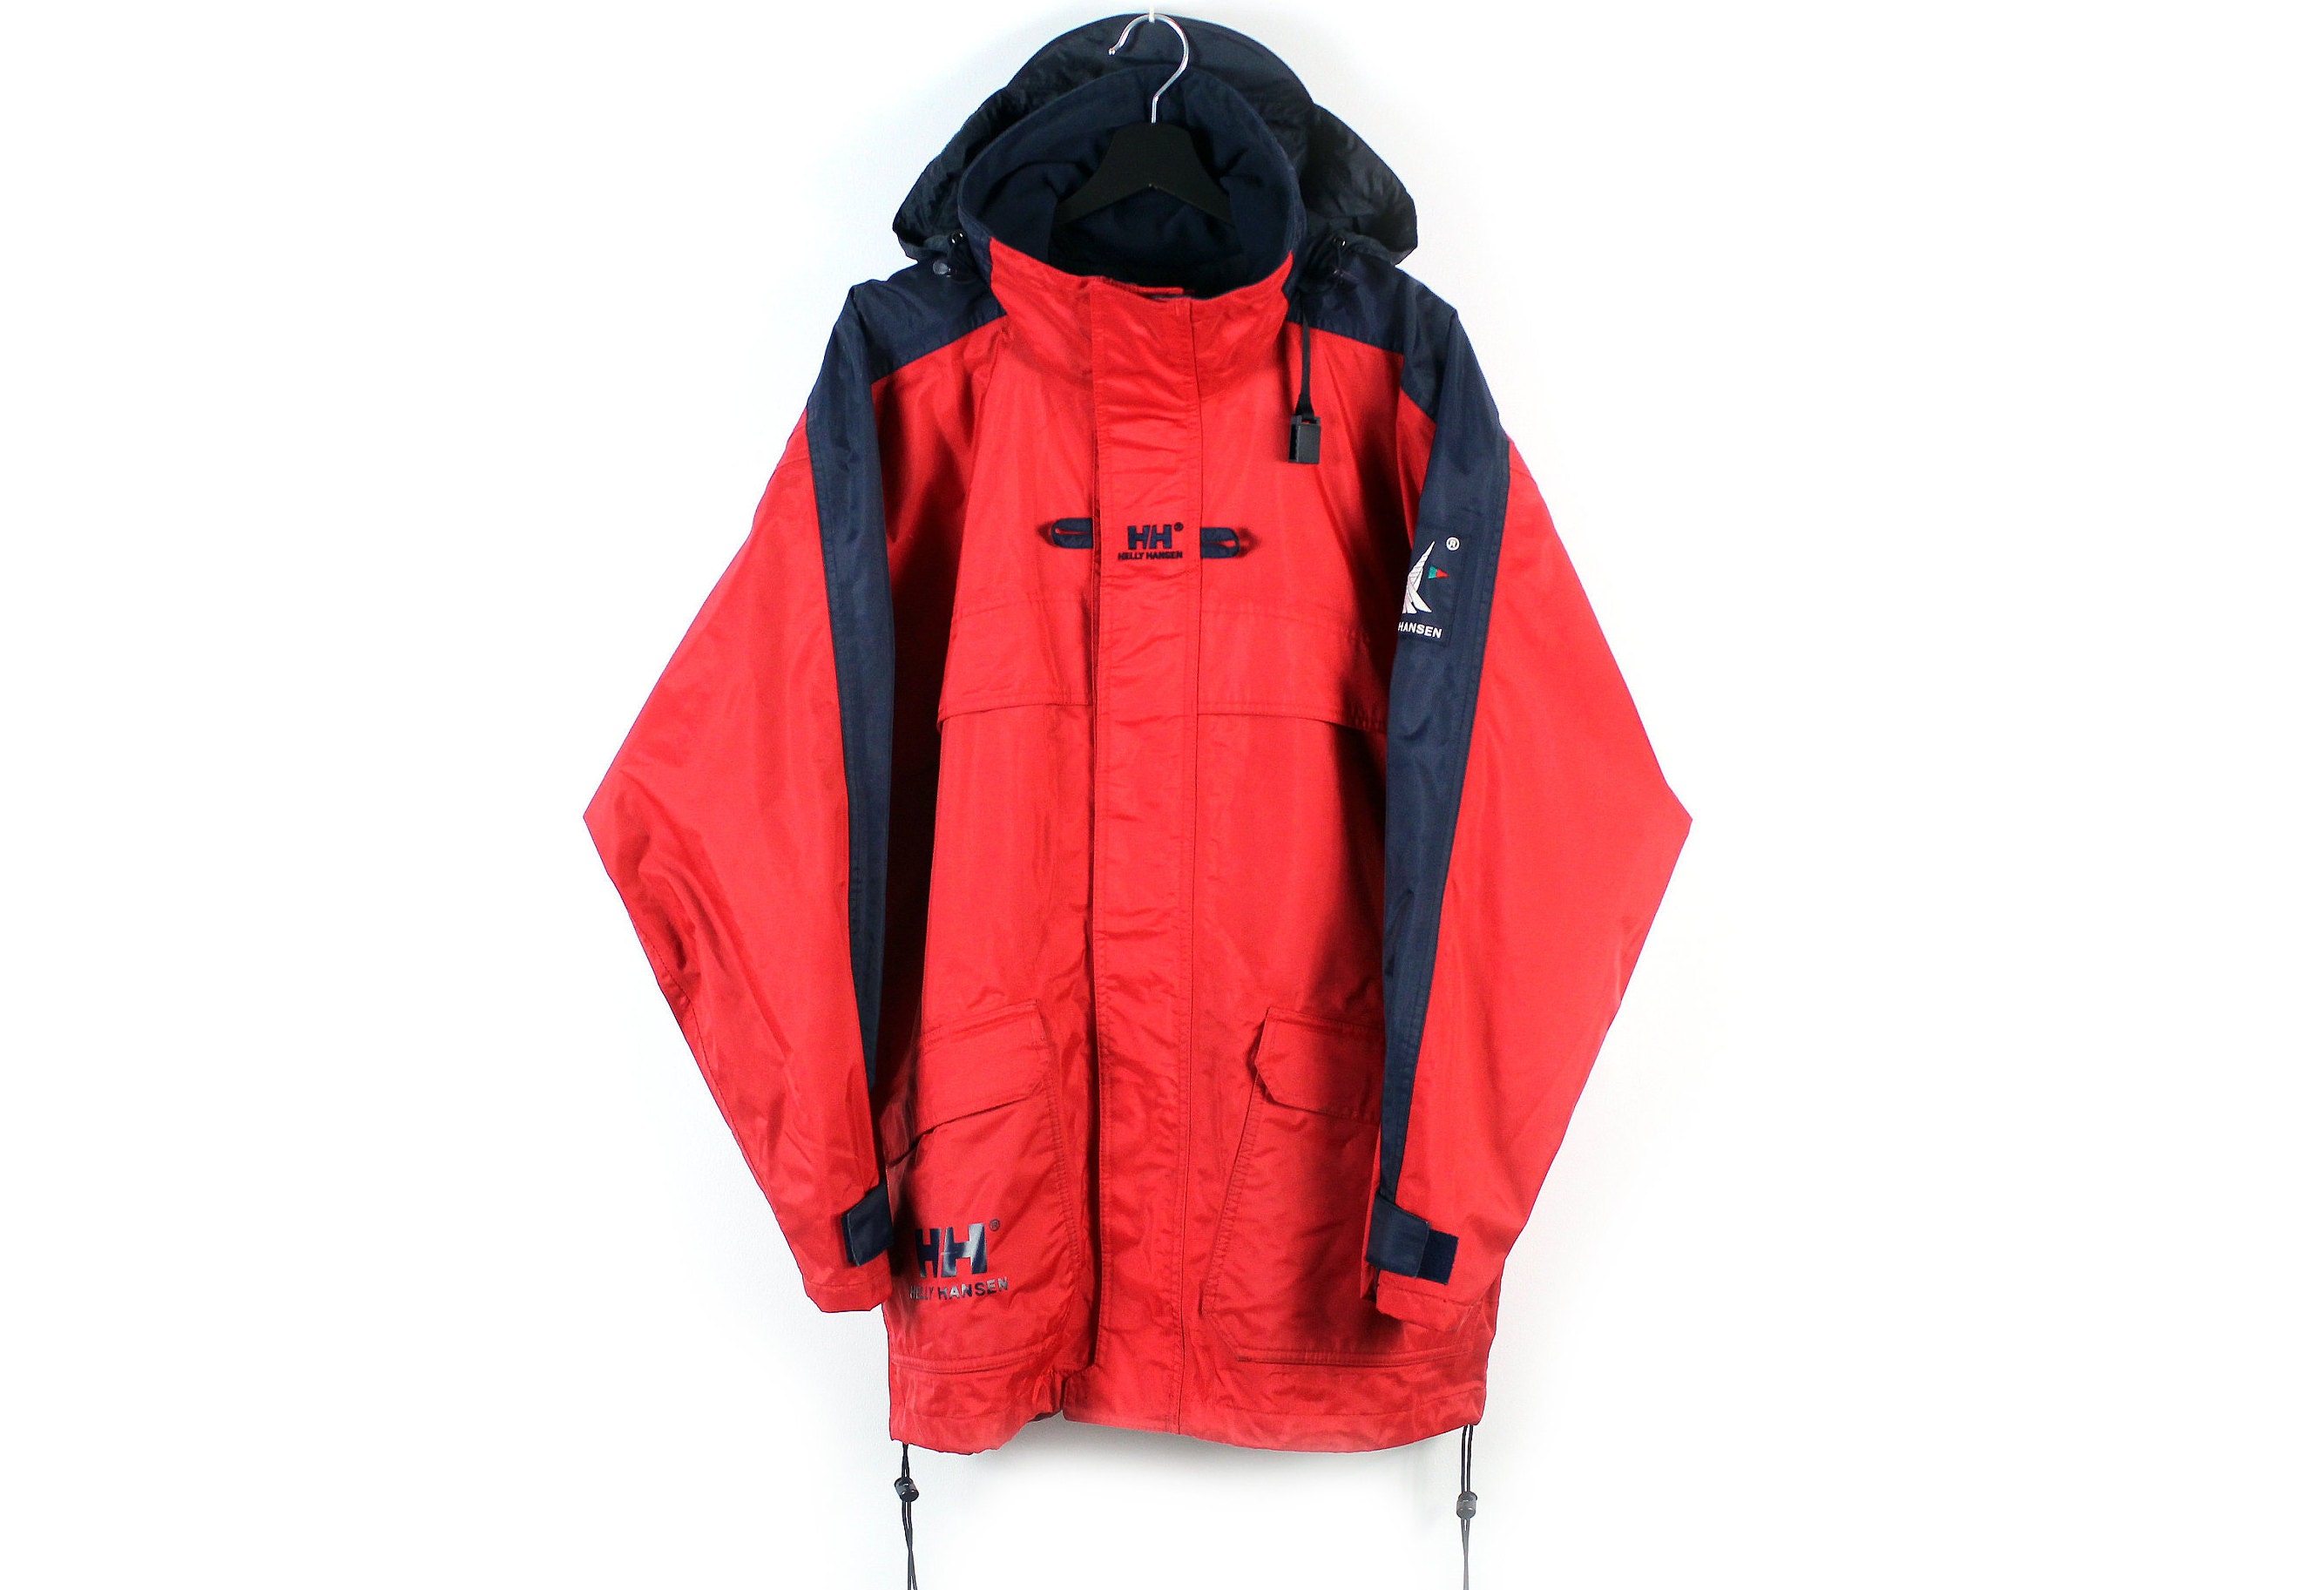 90s Helly Hansen vintage rain jacket / Nautical marine rain | Etsy